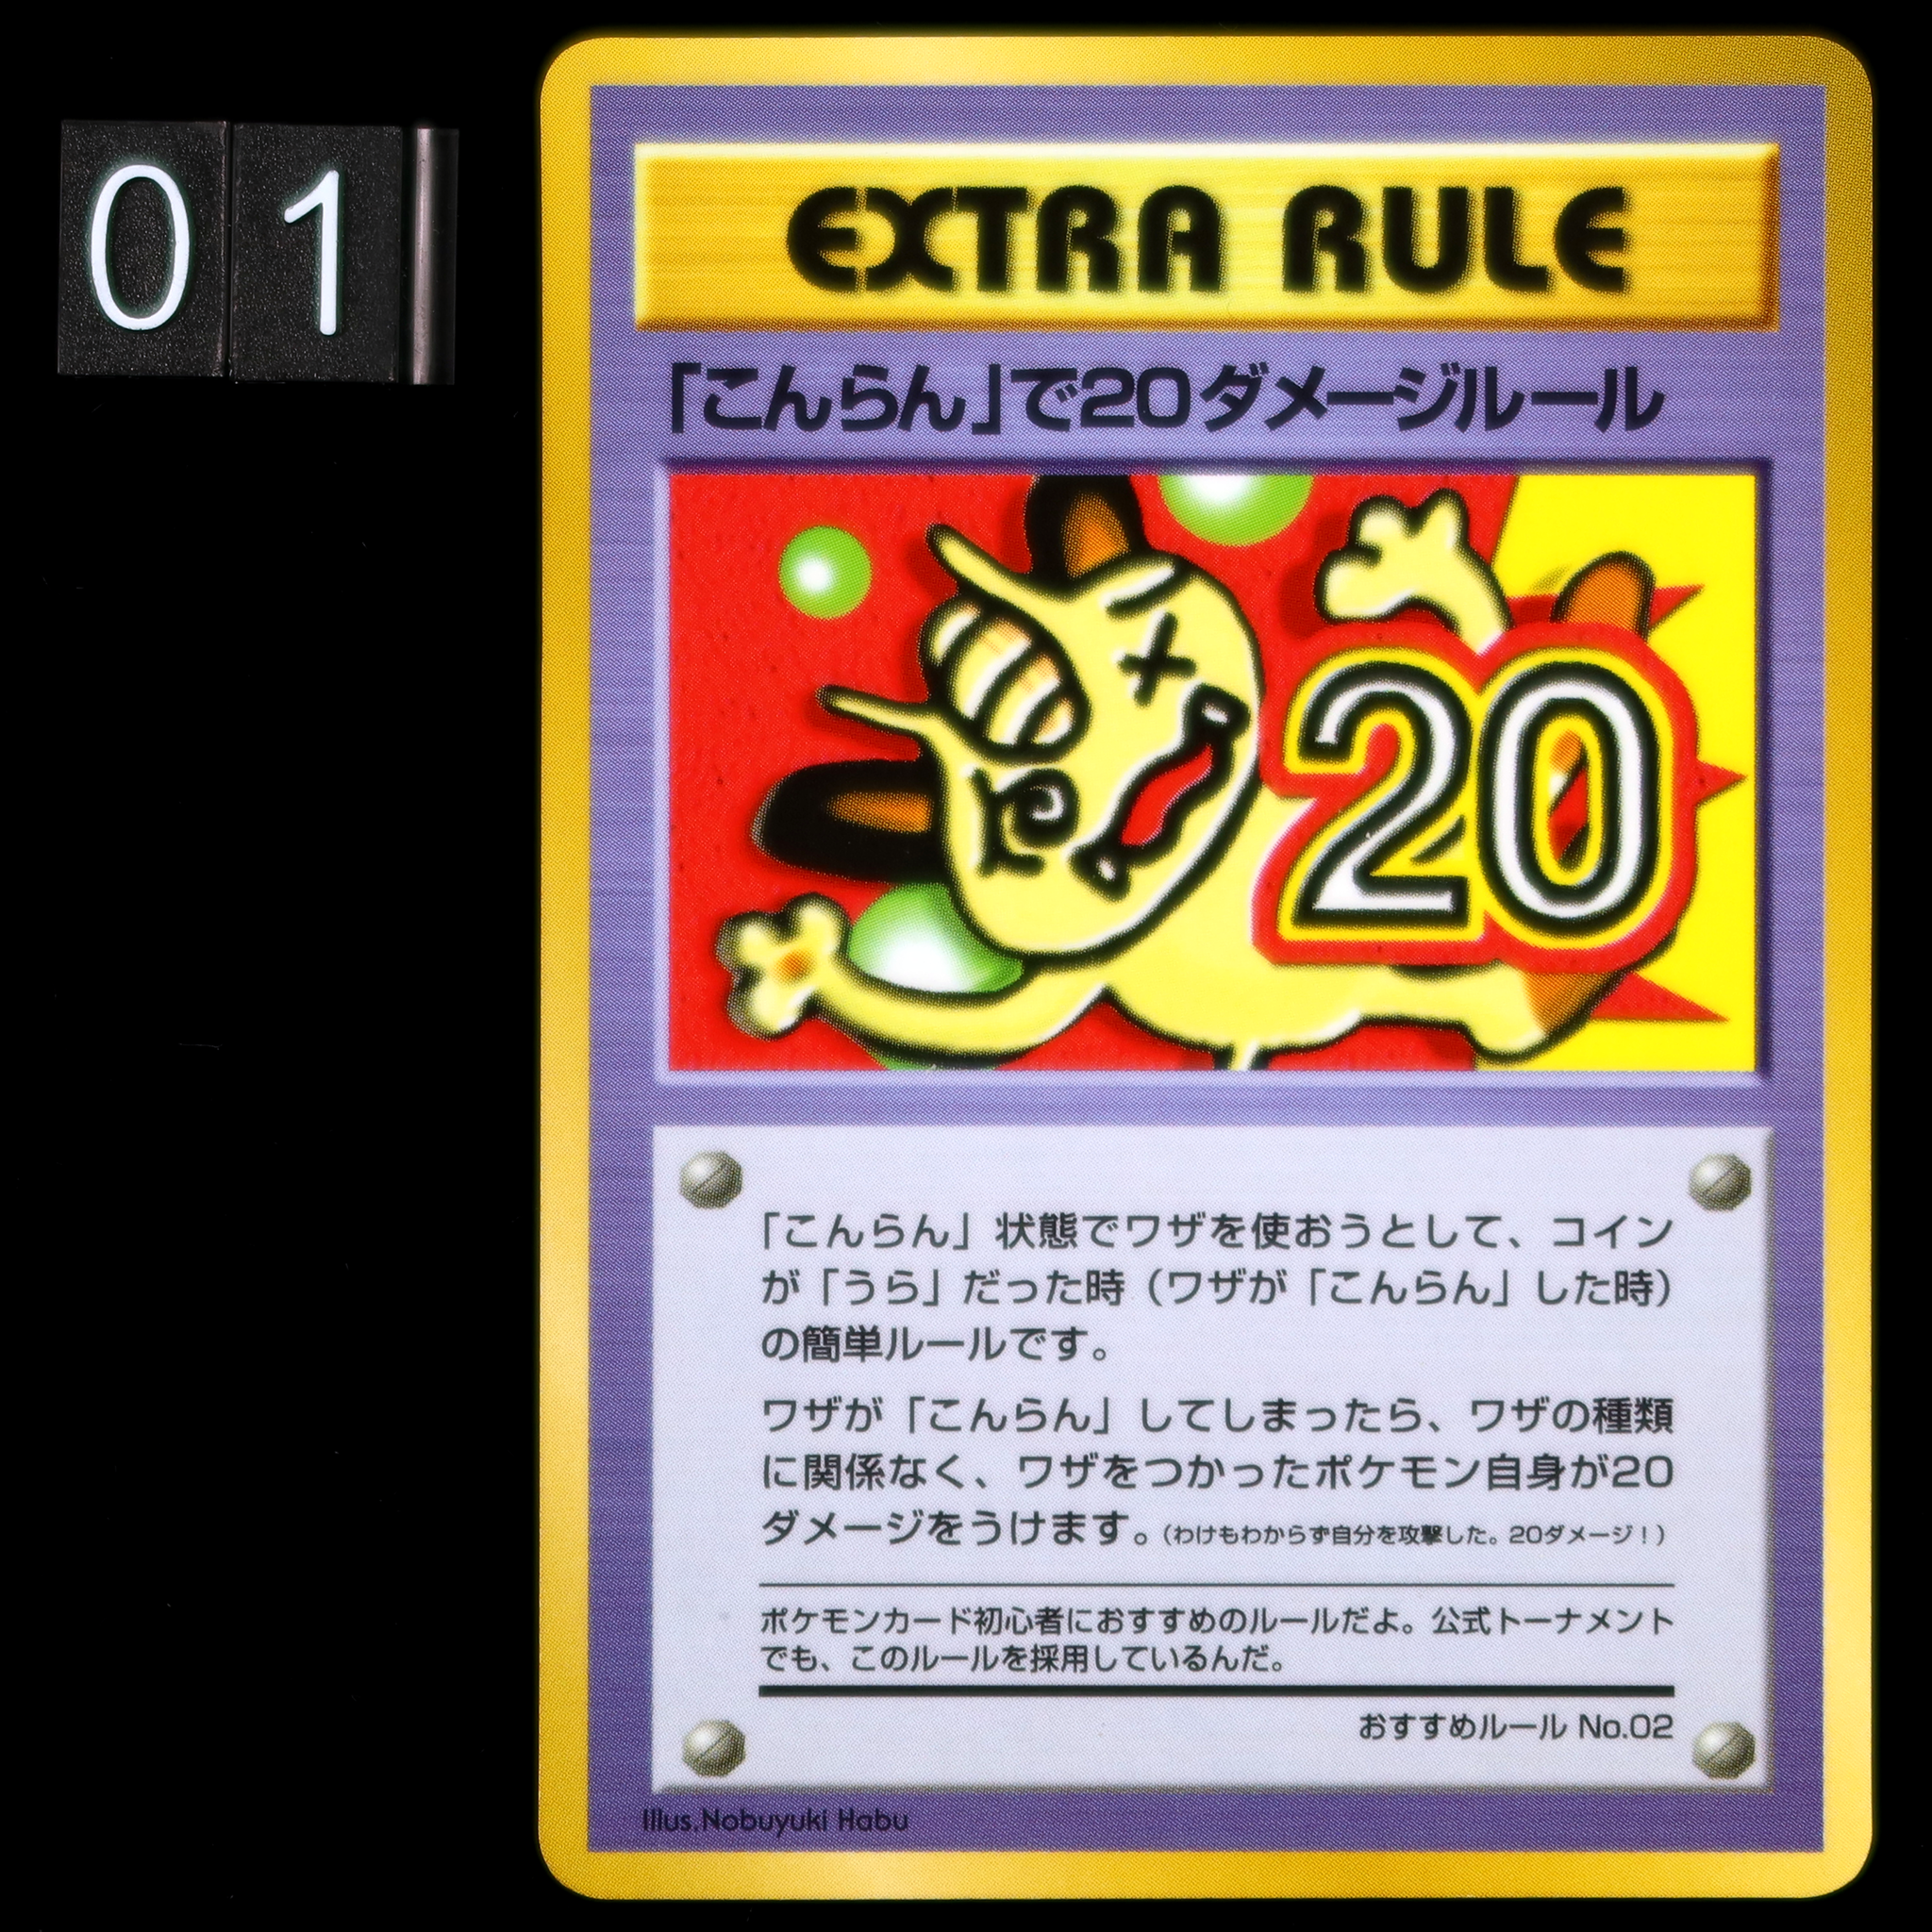 Pokémon Card Game "Confusion 20 damage rule"